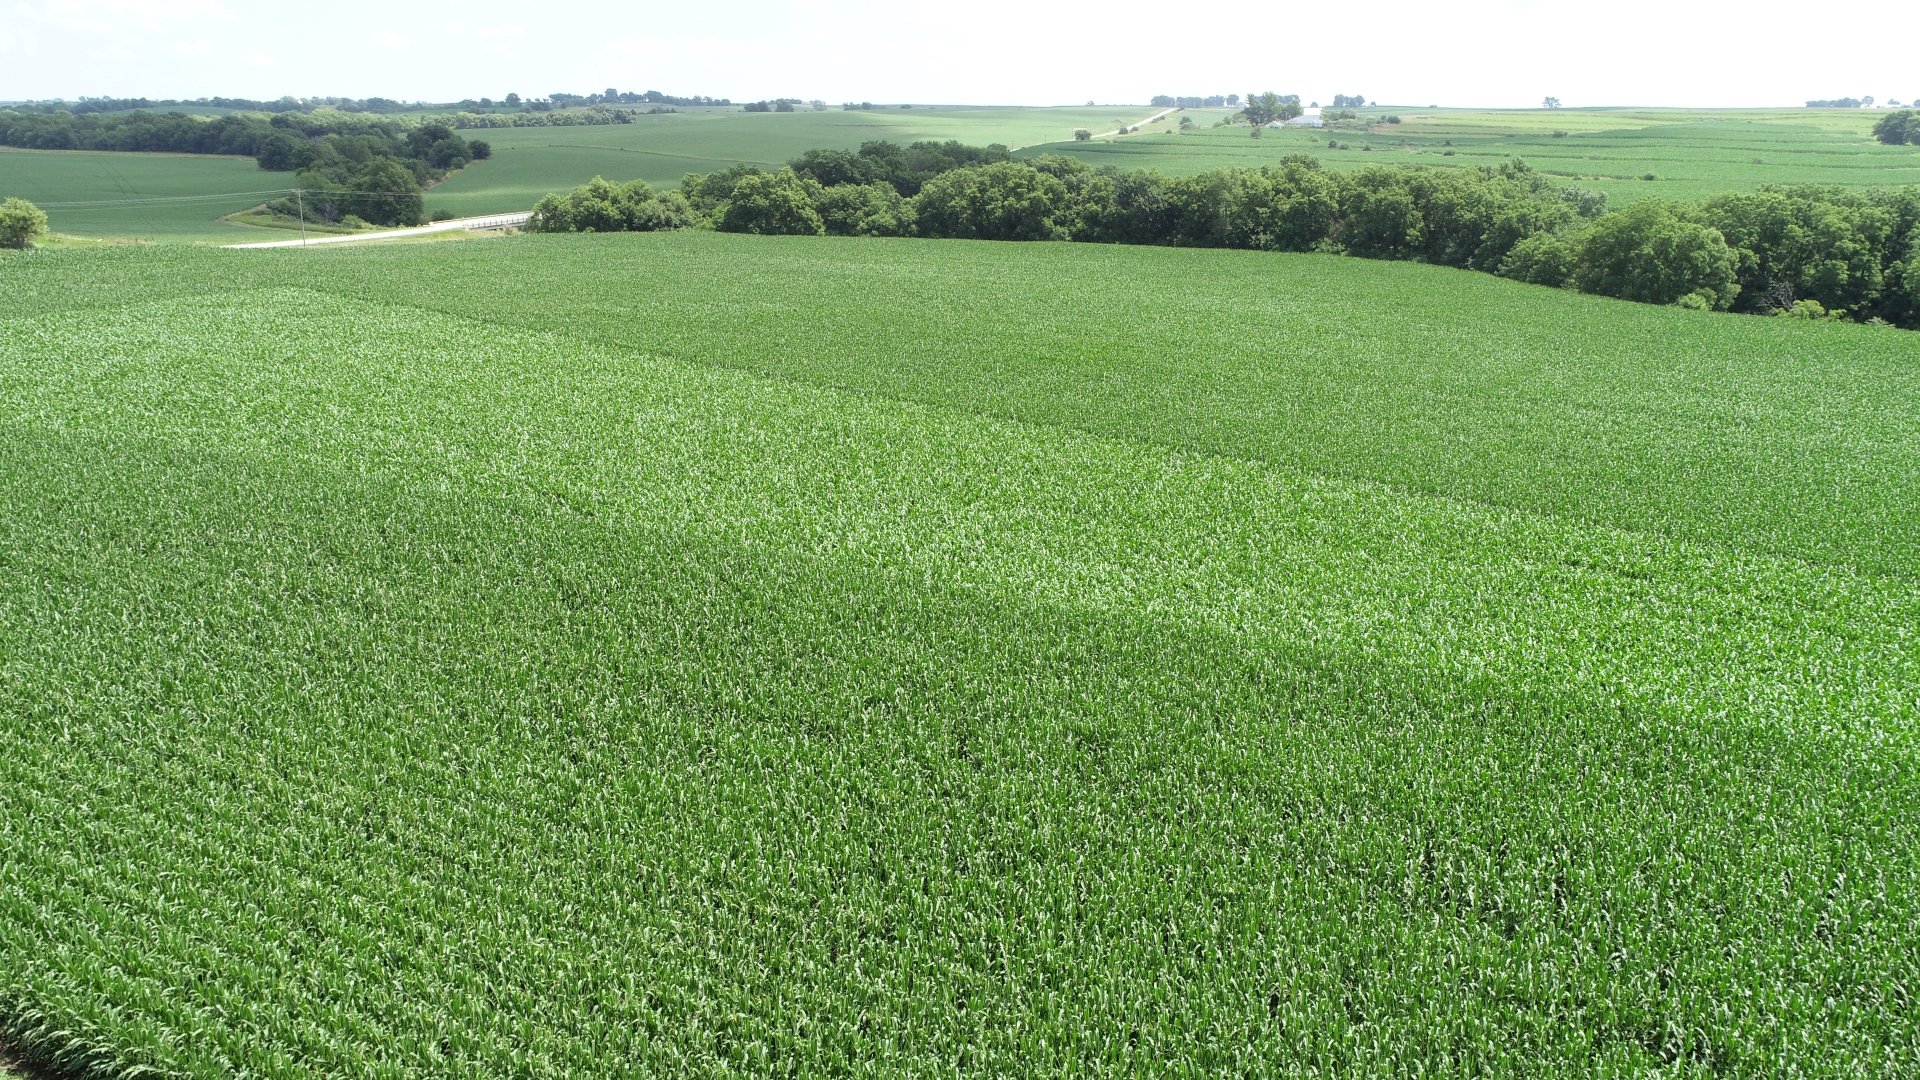 July 2020 - Corn Crop